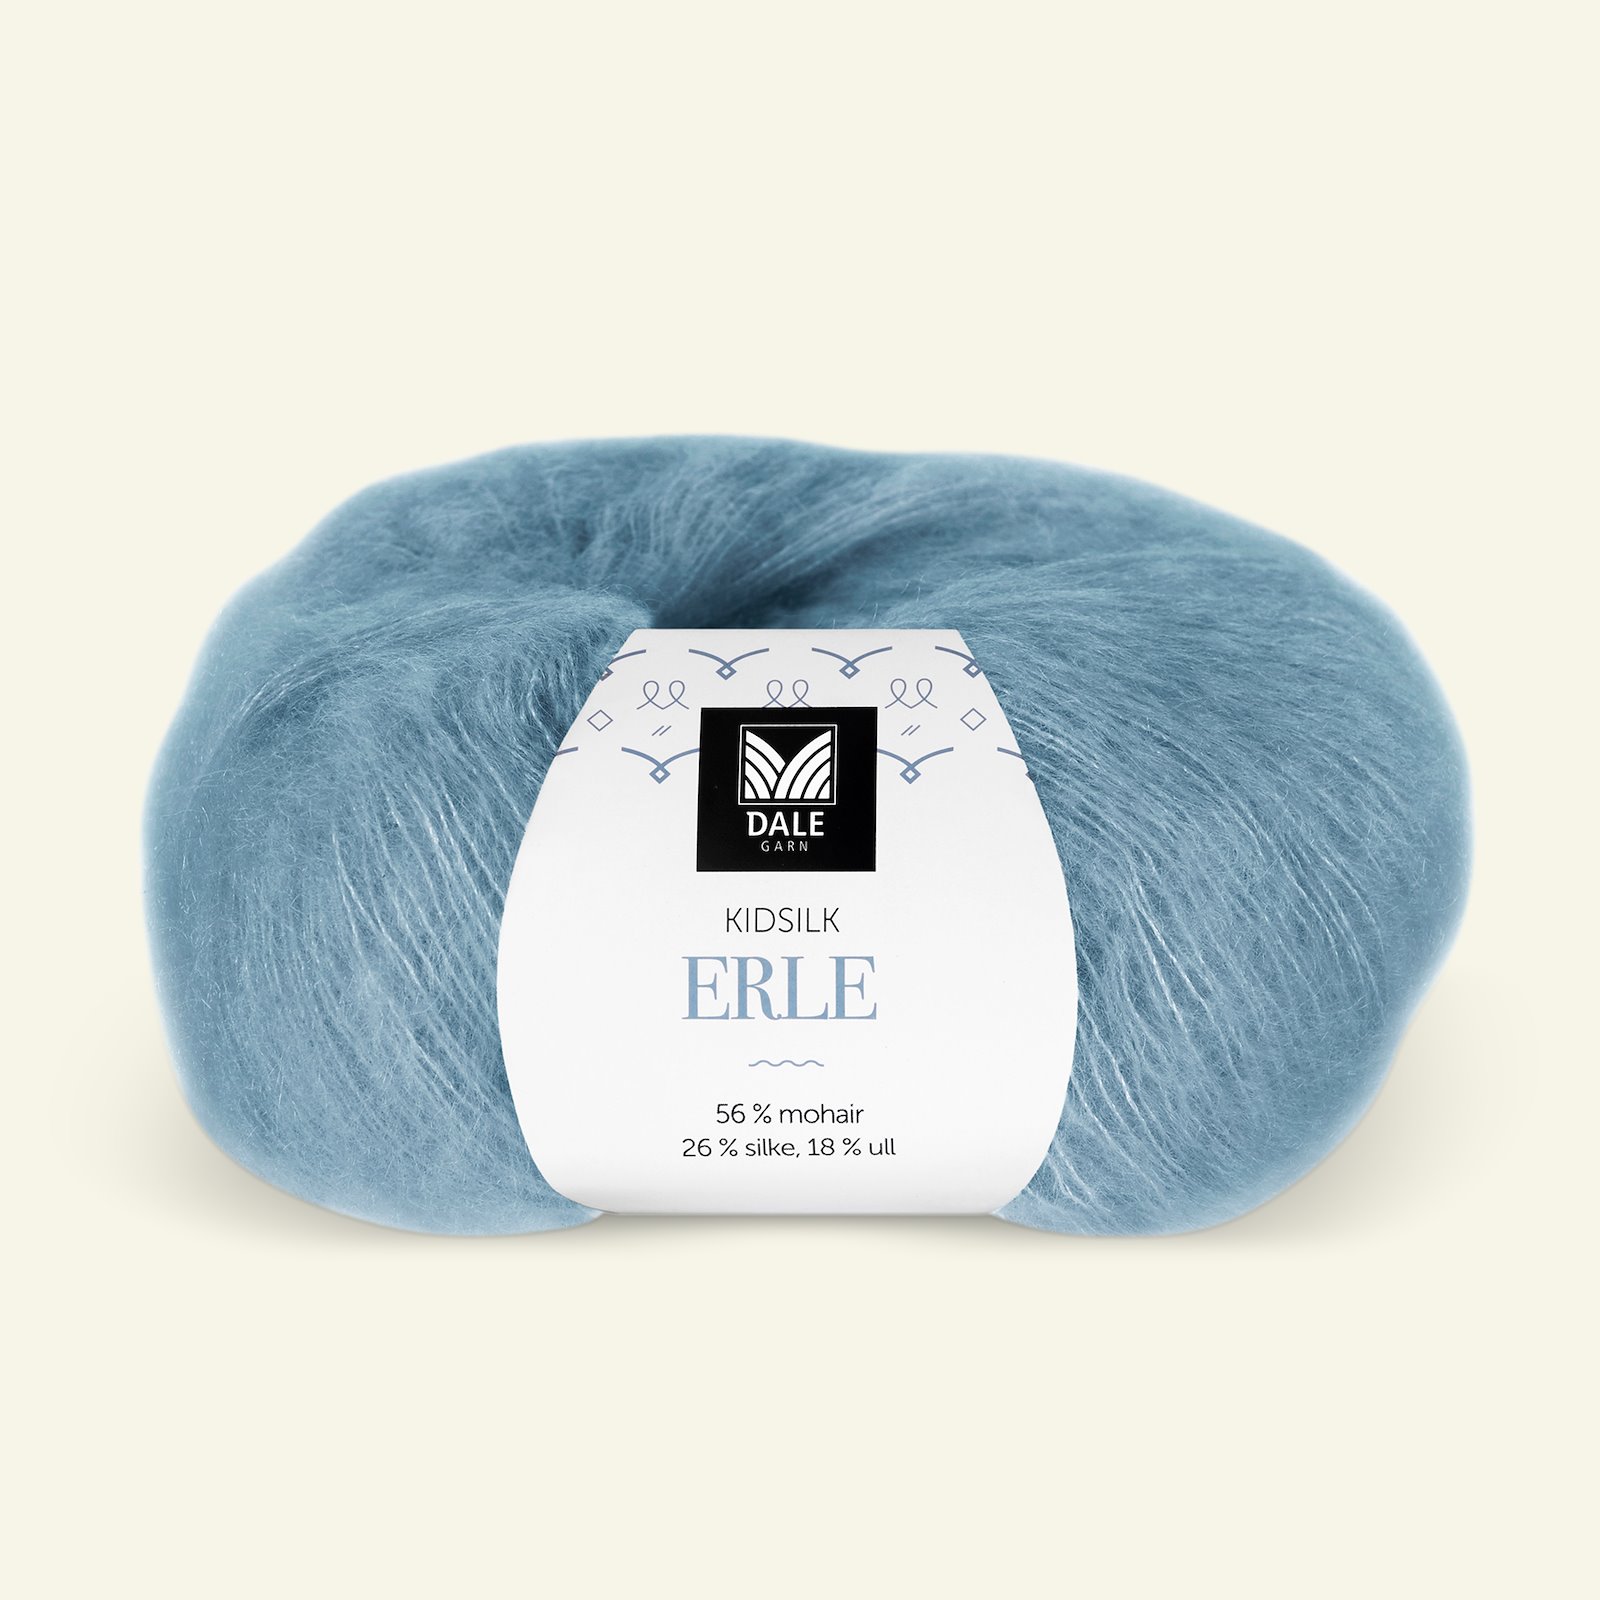 Dale Garn, silk mohair wool yarn "Kidsilk Erle", light denim (9040) 90000787_pack